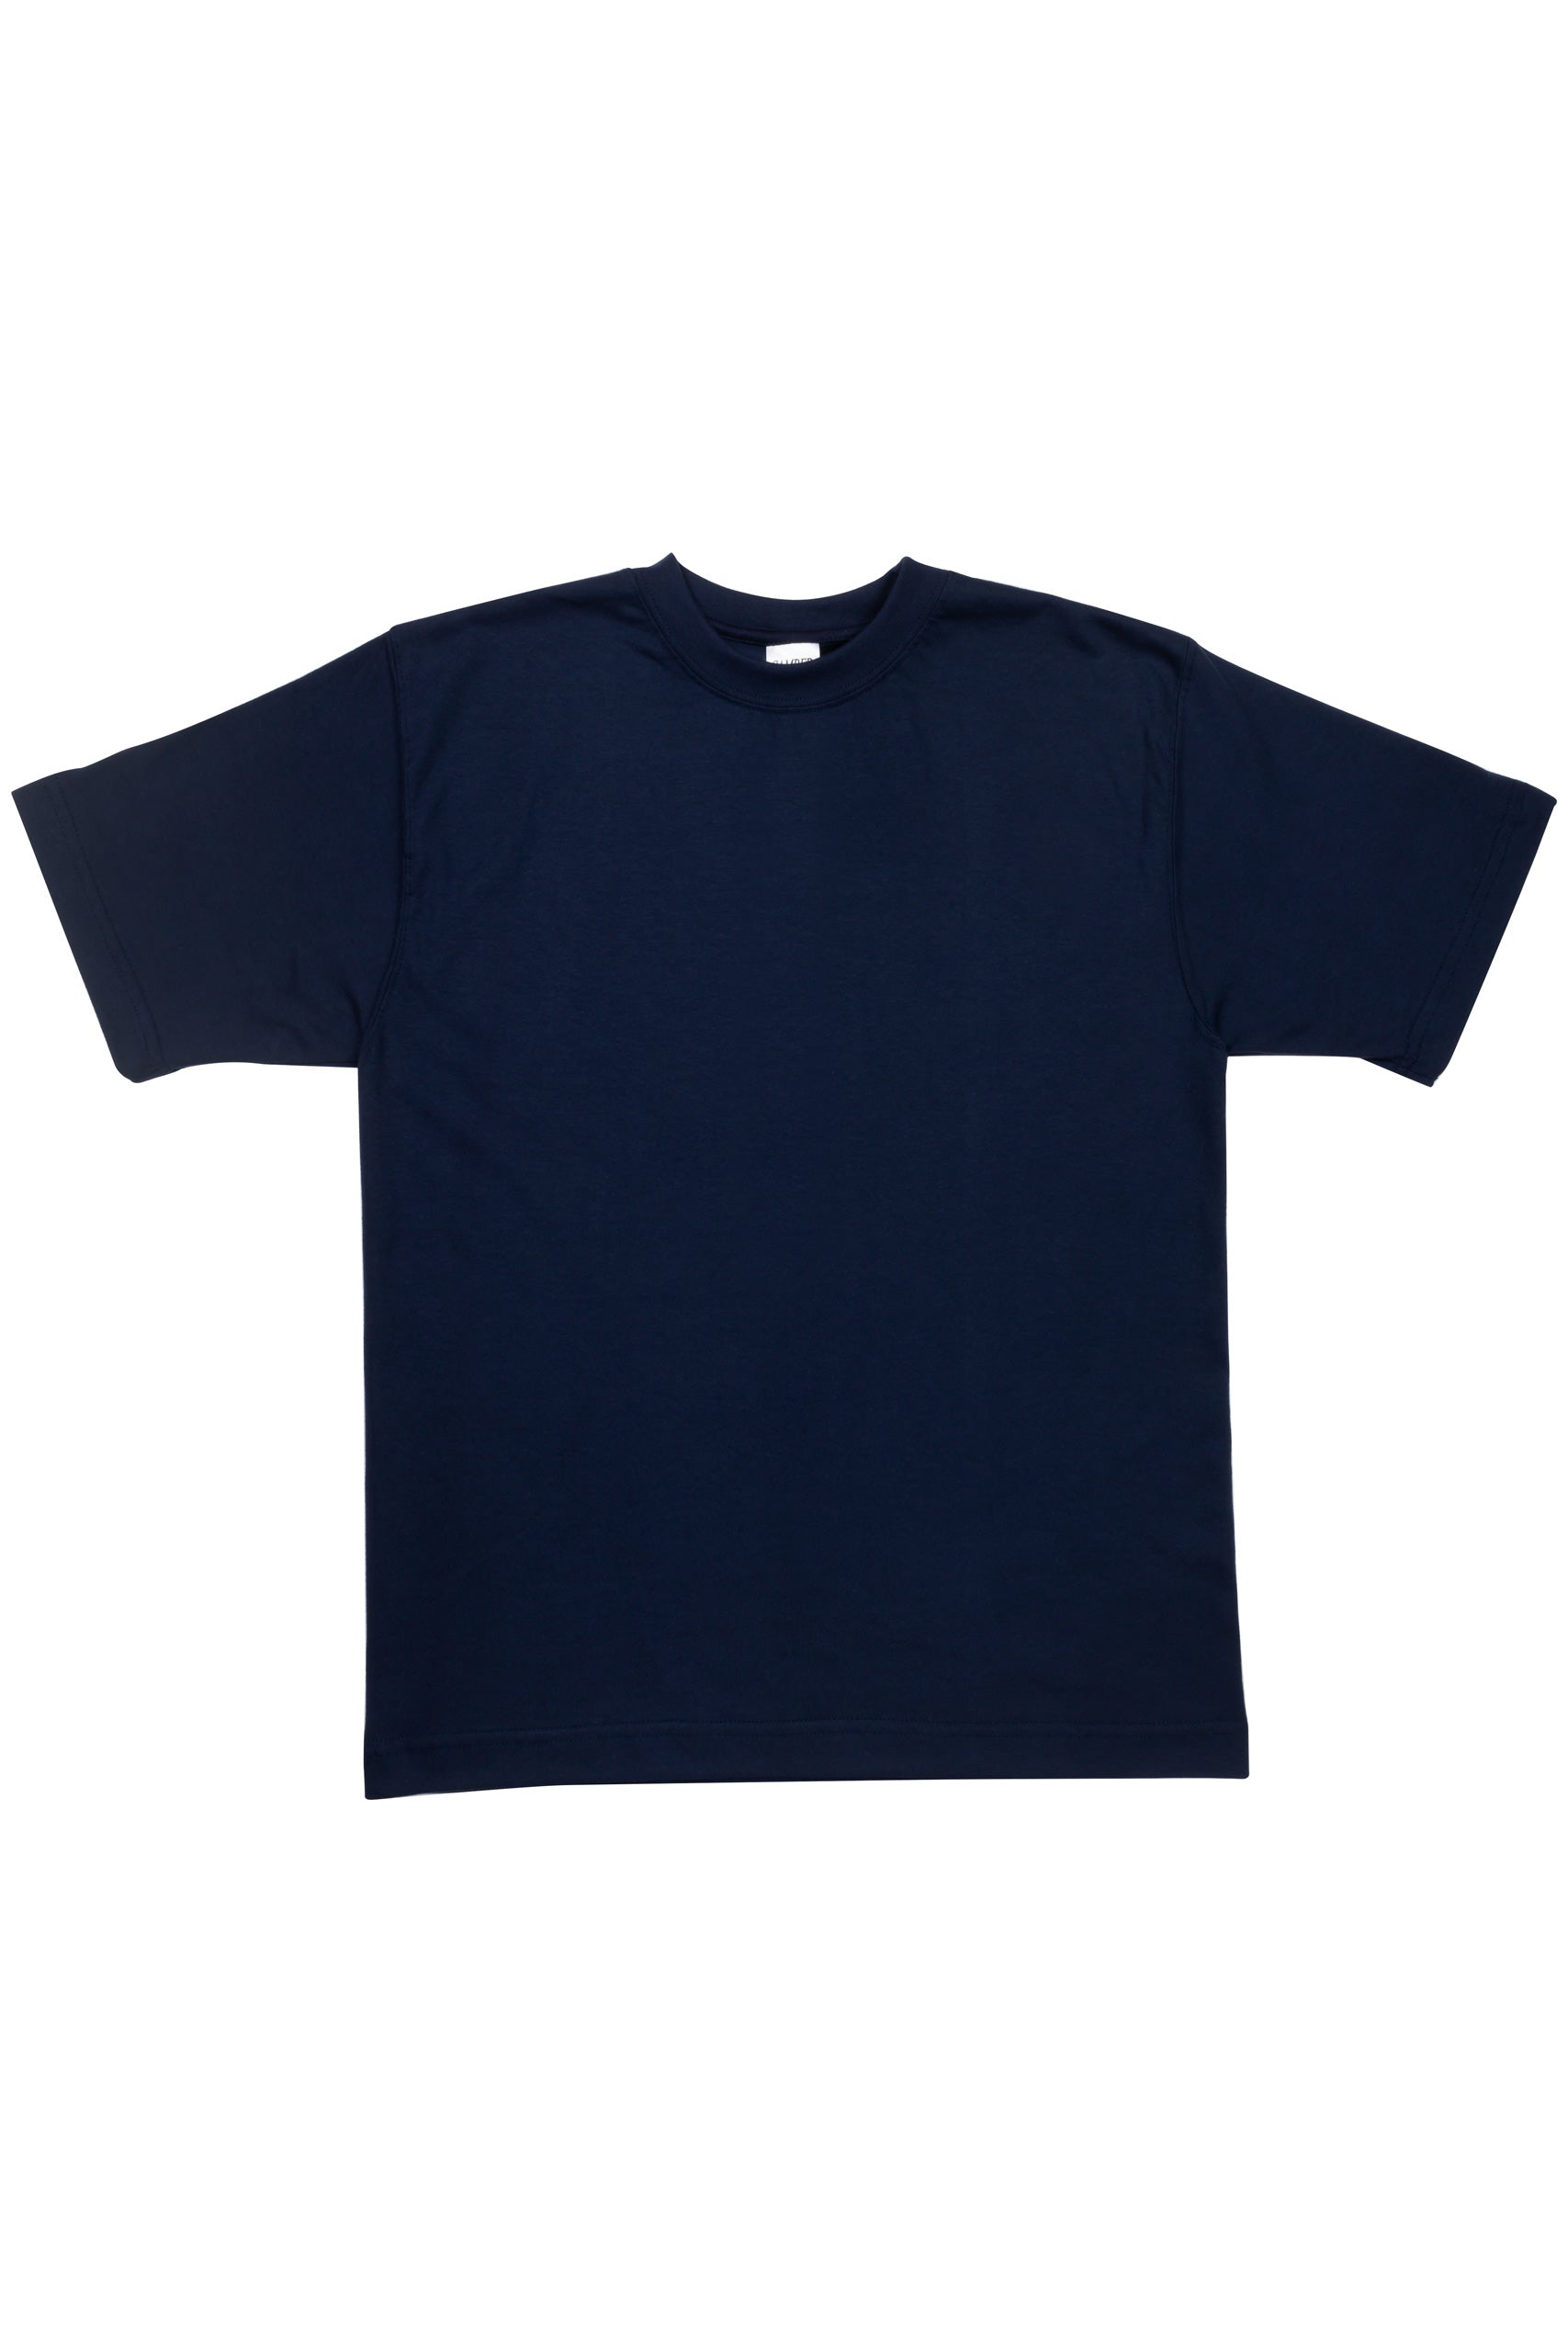 T-Shirt Camber 701 Navy Embark – Clothiers USA 6oz